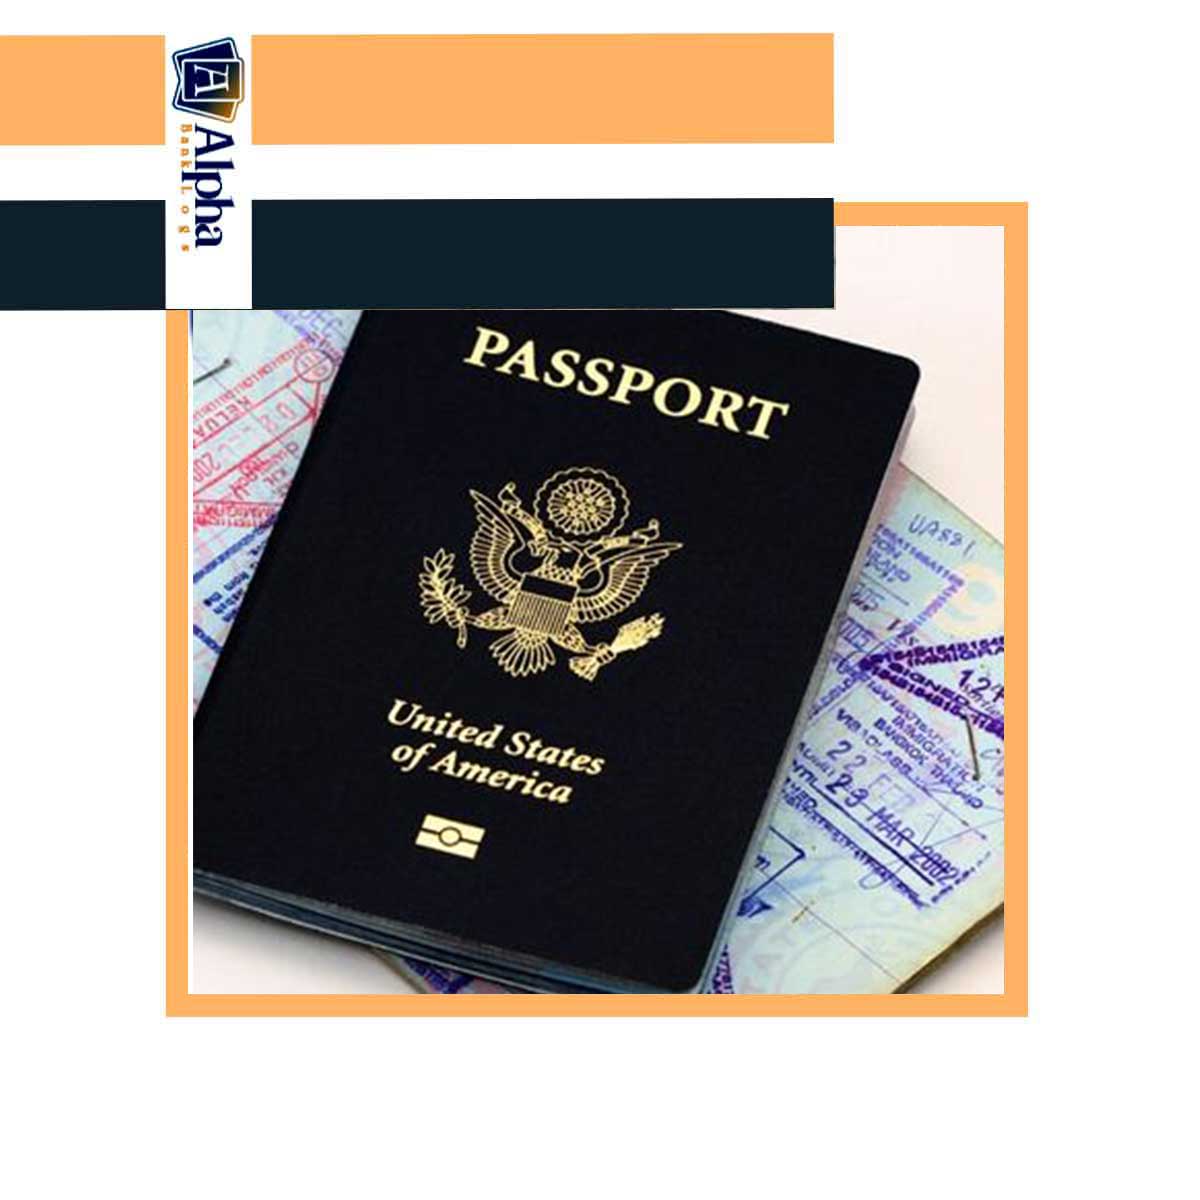 USA passport scans